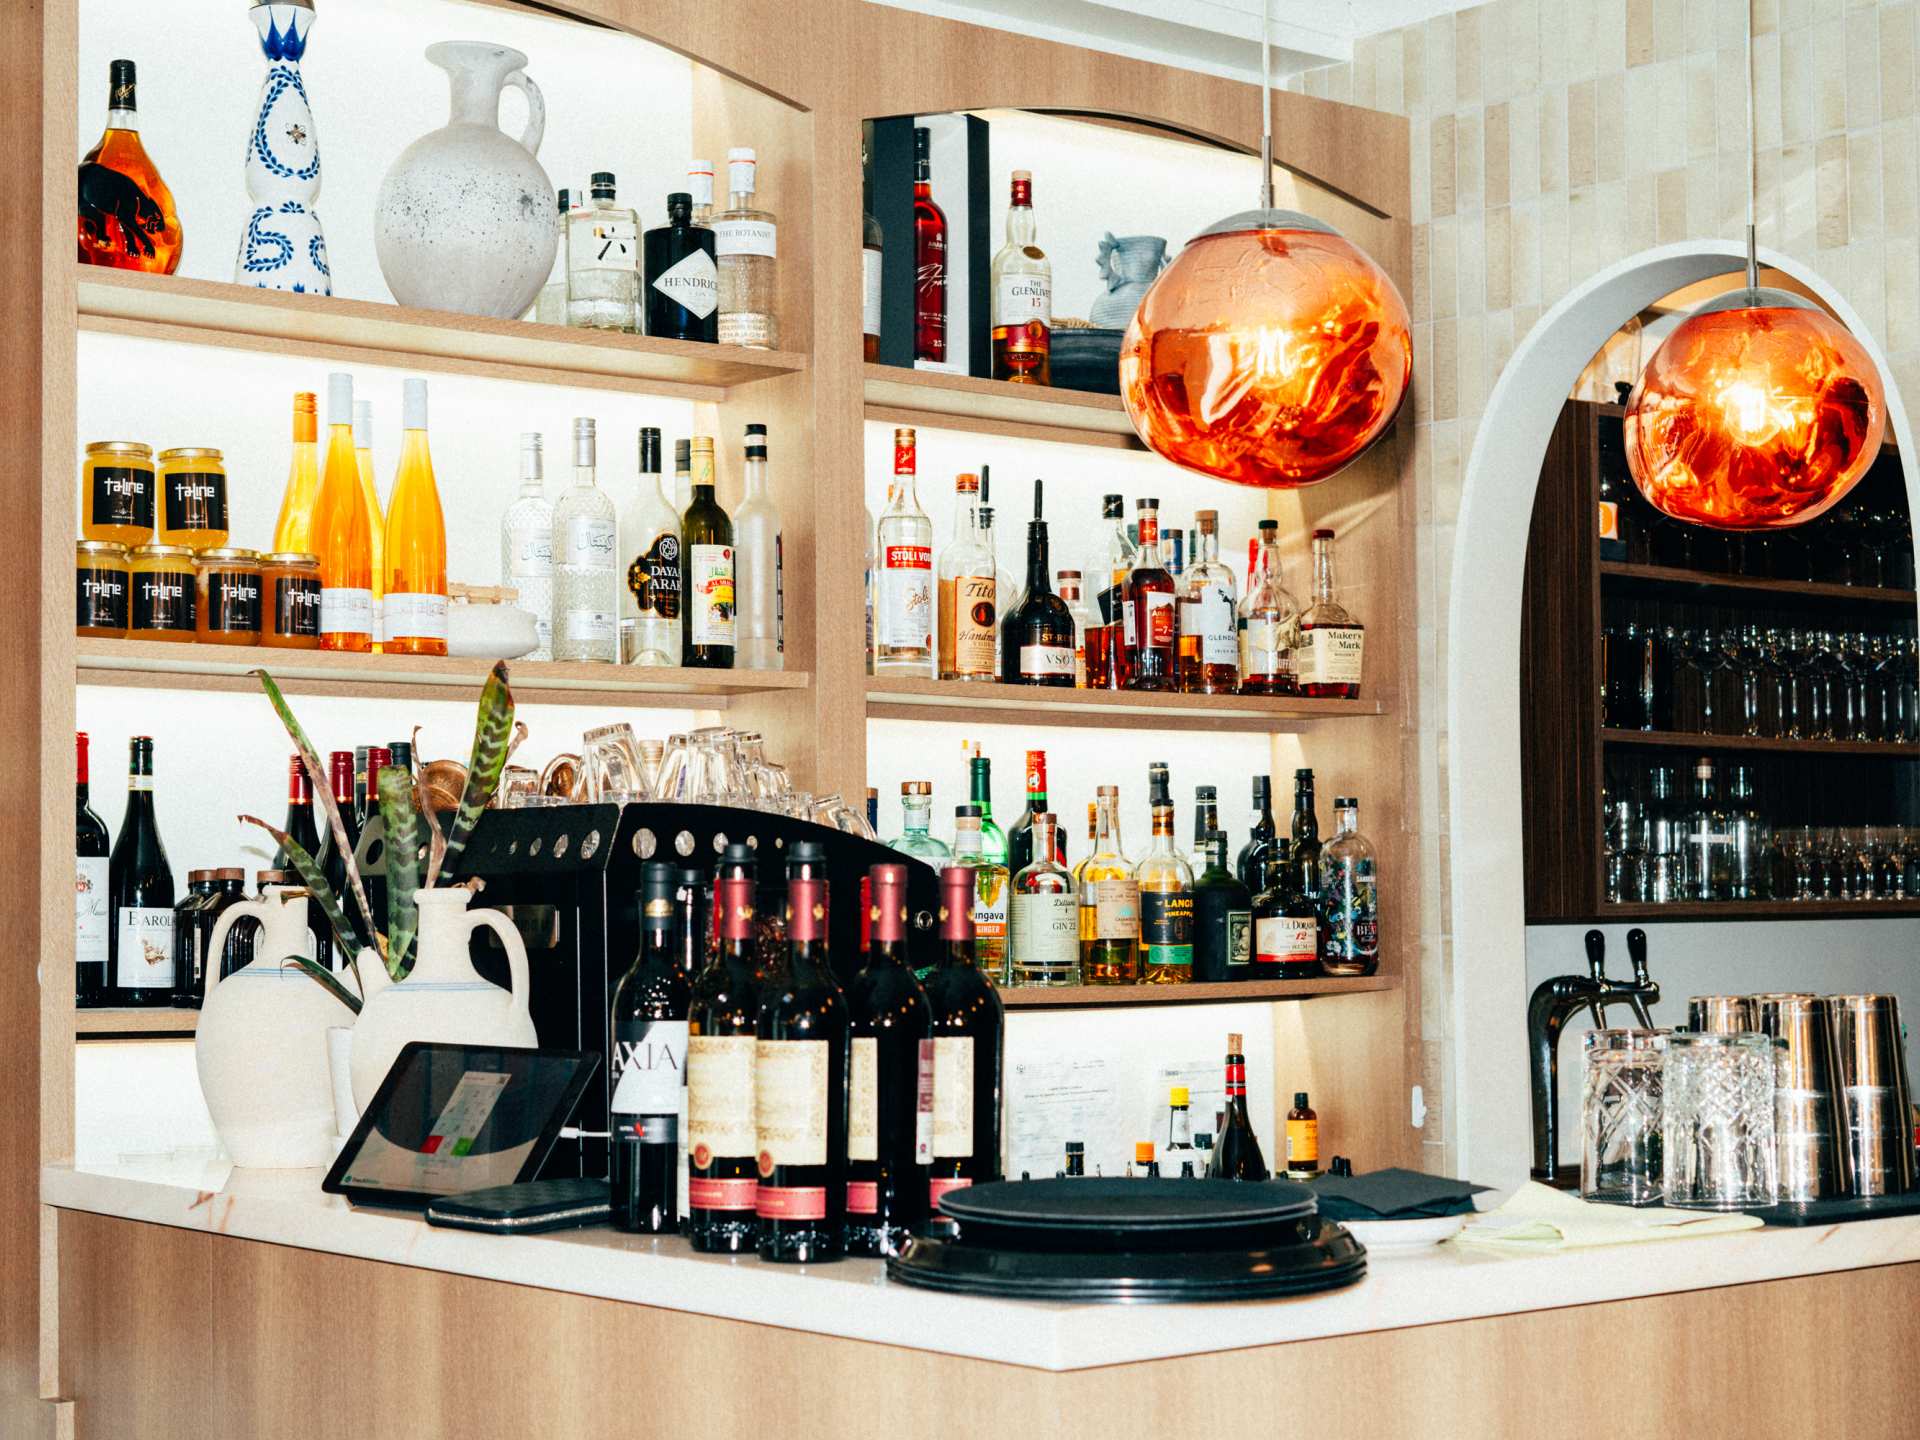 Taline Toronto | The bar area at Taline